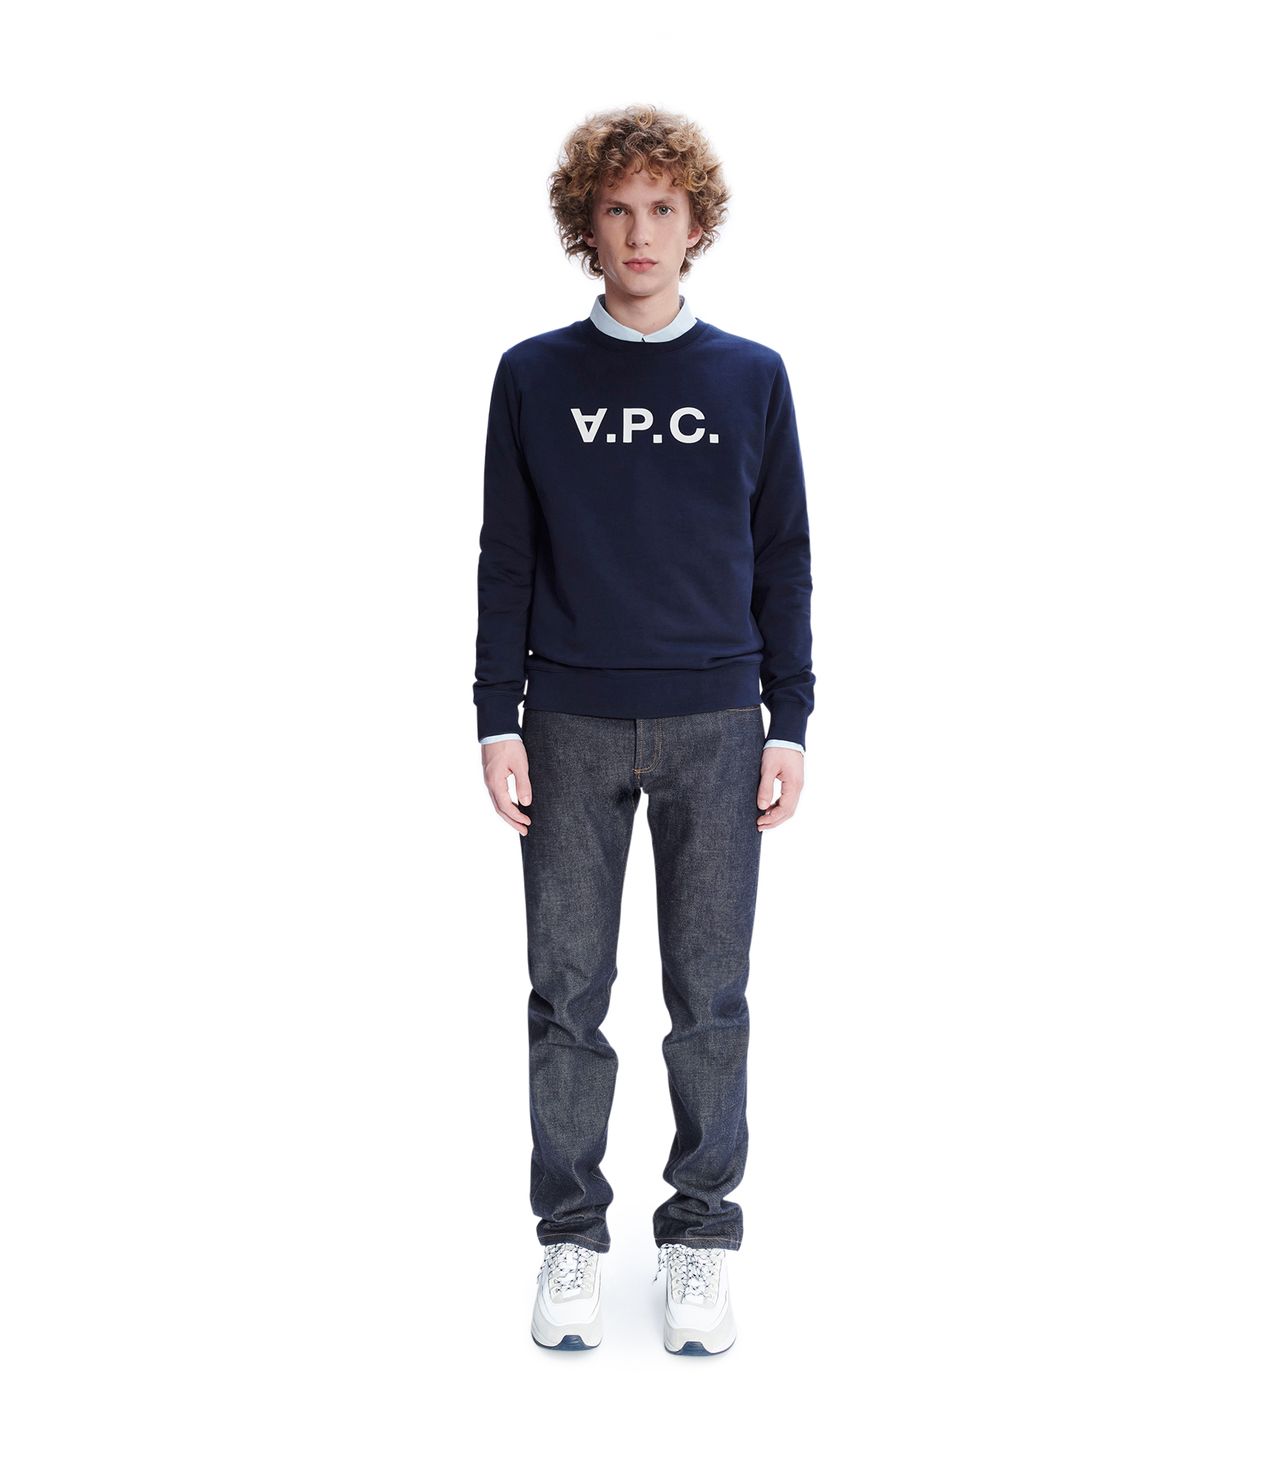 VPC sweatshirt DARK NAVY BLUE APC